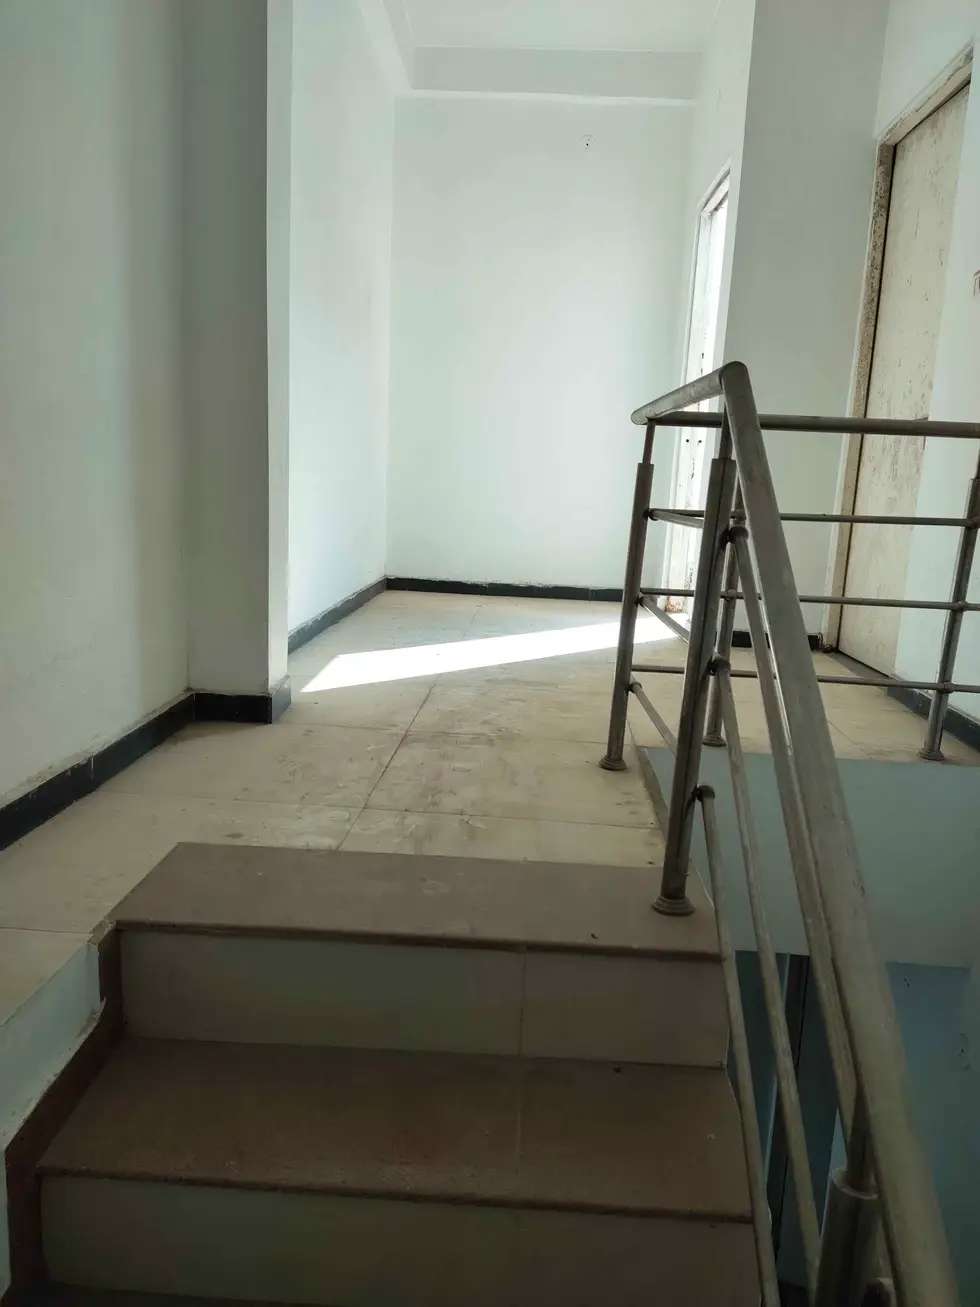 3 Bed/ 3 Bath Sell House/ Bungalow/ Villa; 1,000 sq. ft. carpet area; 1,215 sq. ft. lot for sale @Katara hills bhopal